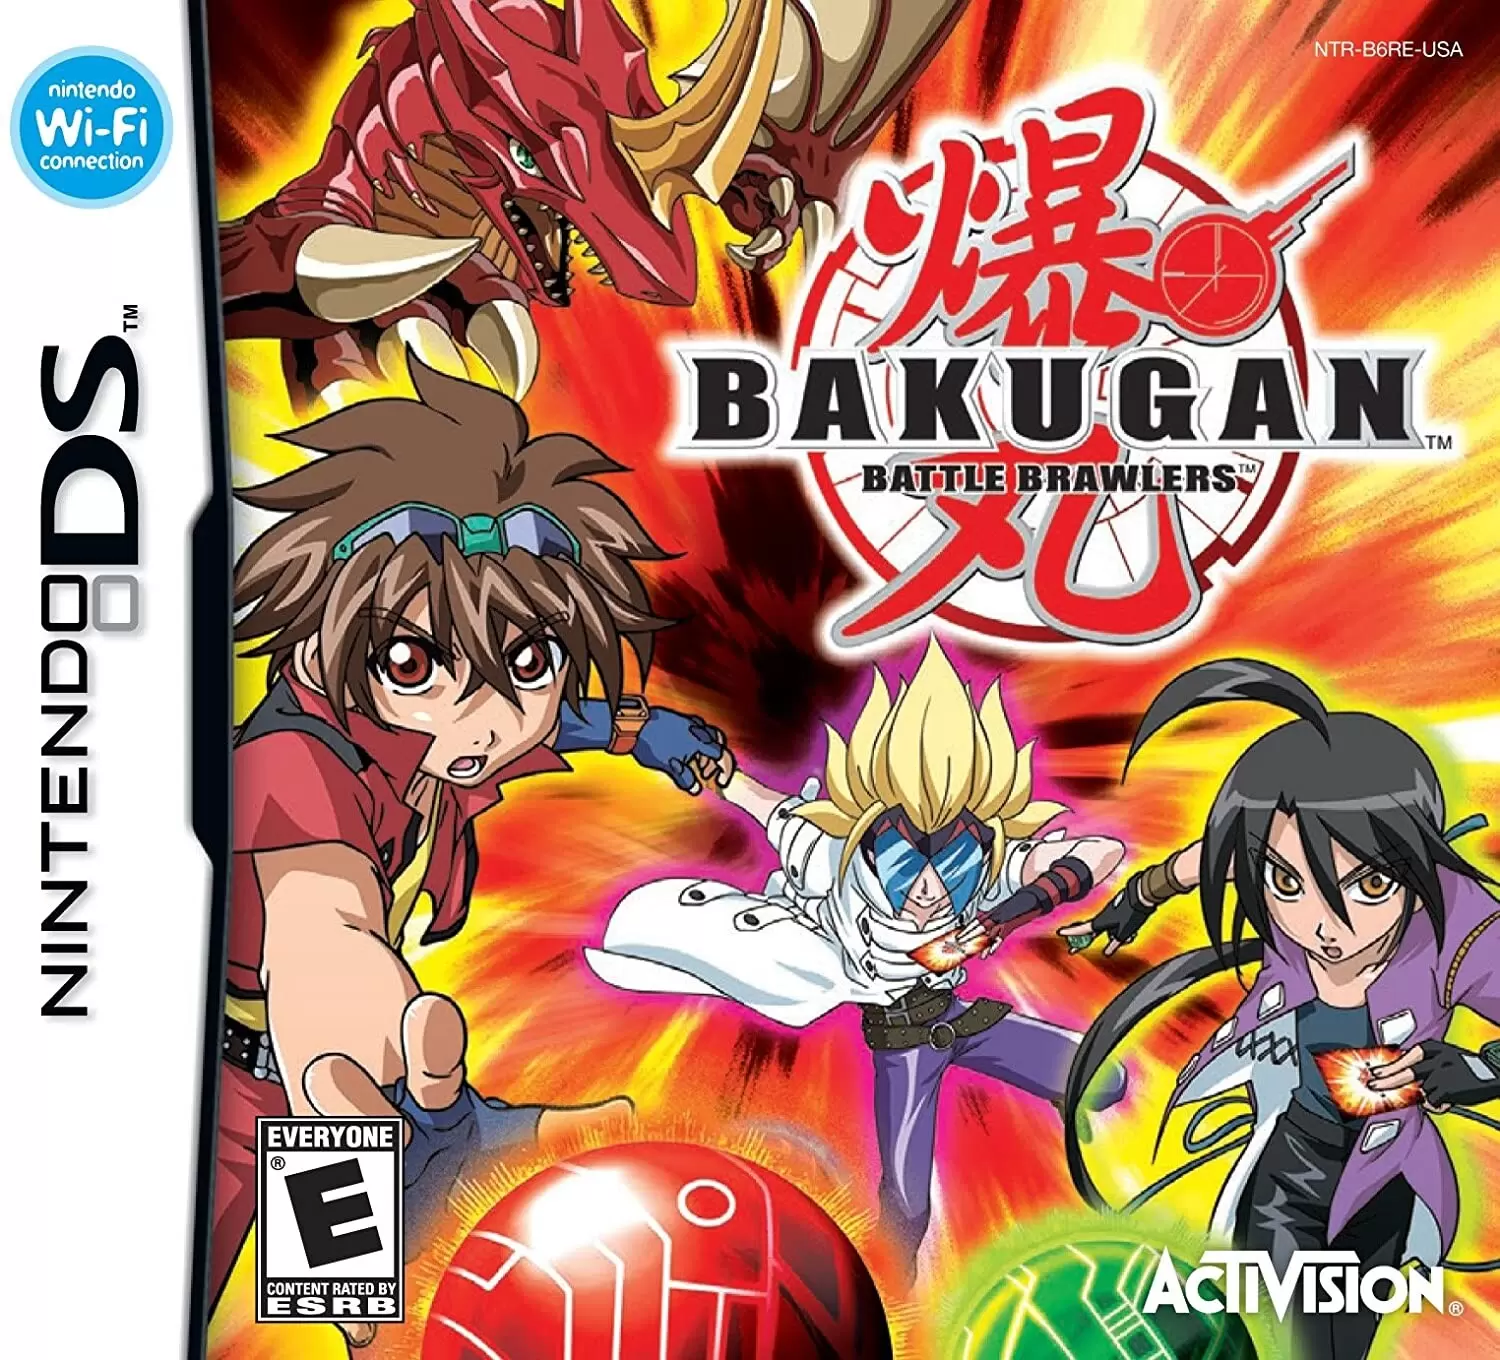 Nintendo DS Games - Bakugan: Battle Brawlers